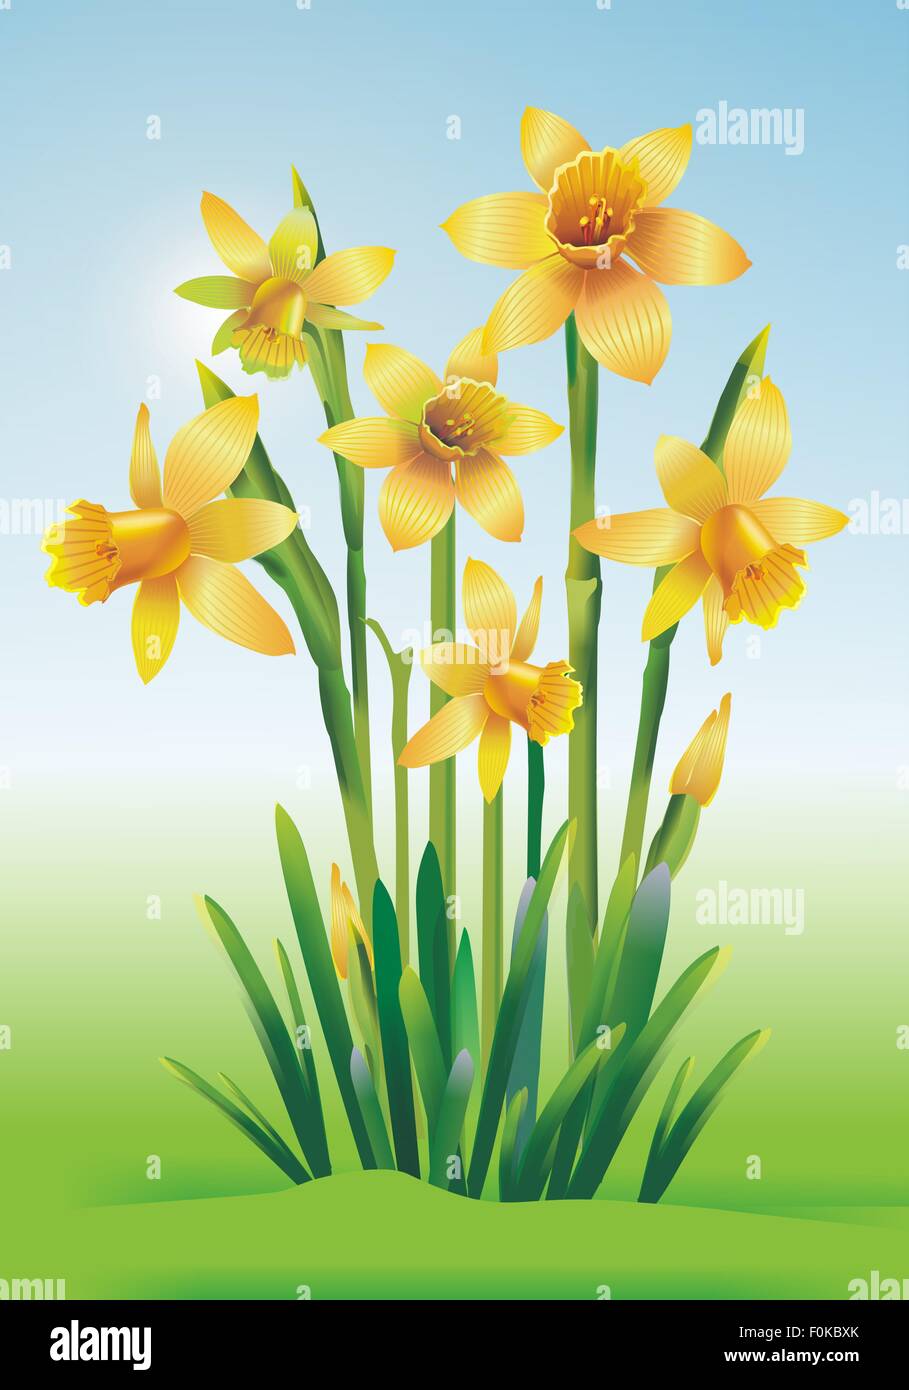 Jonquils Art Illustration. Yellow Jonquils Floral Theme Stock Photo - Alamy